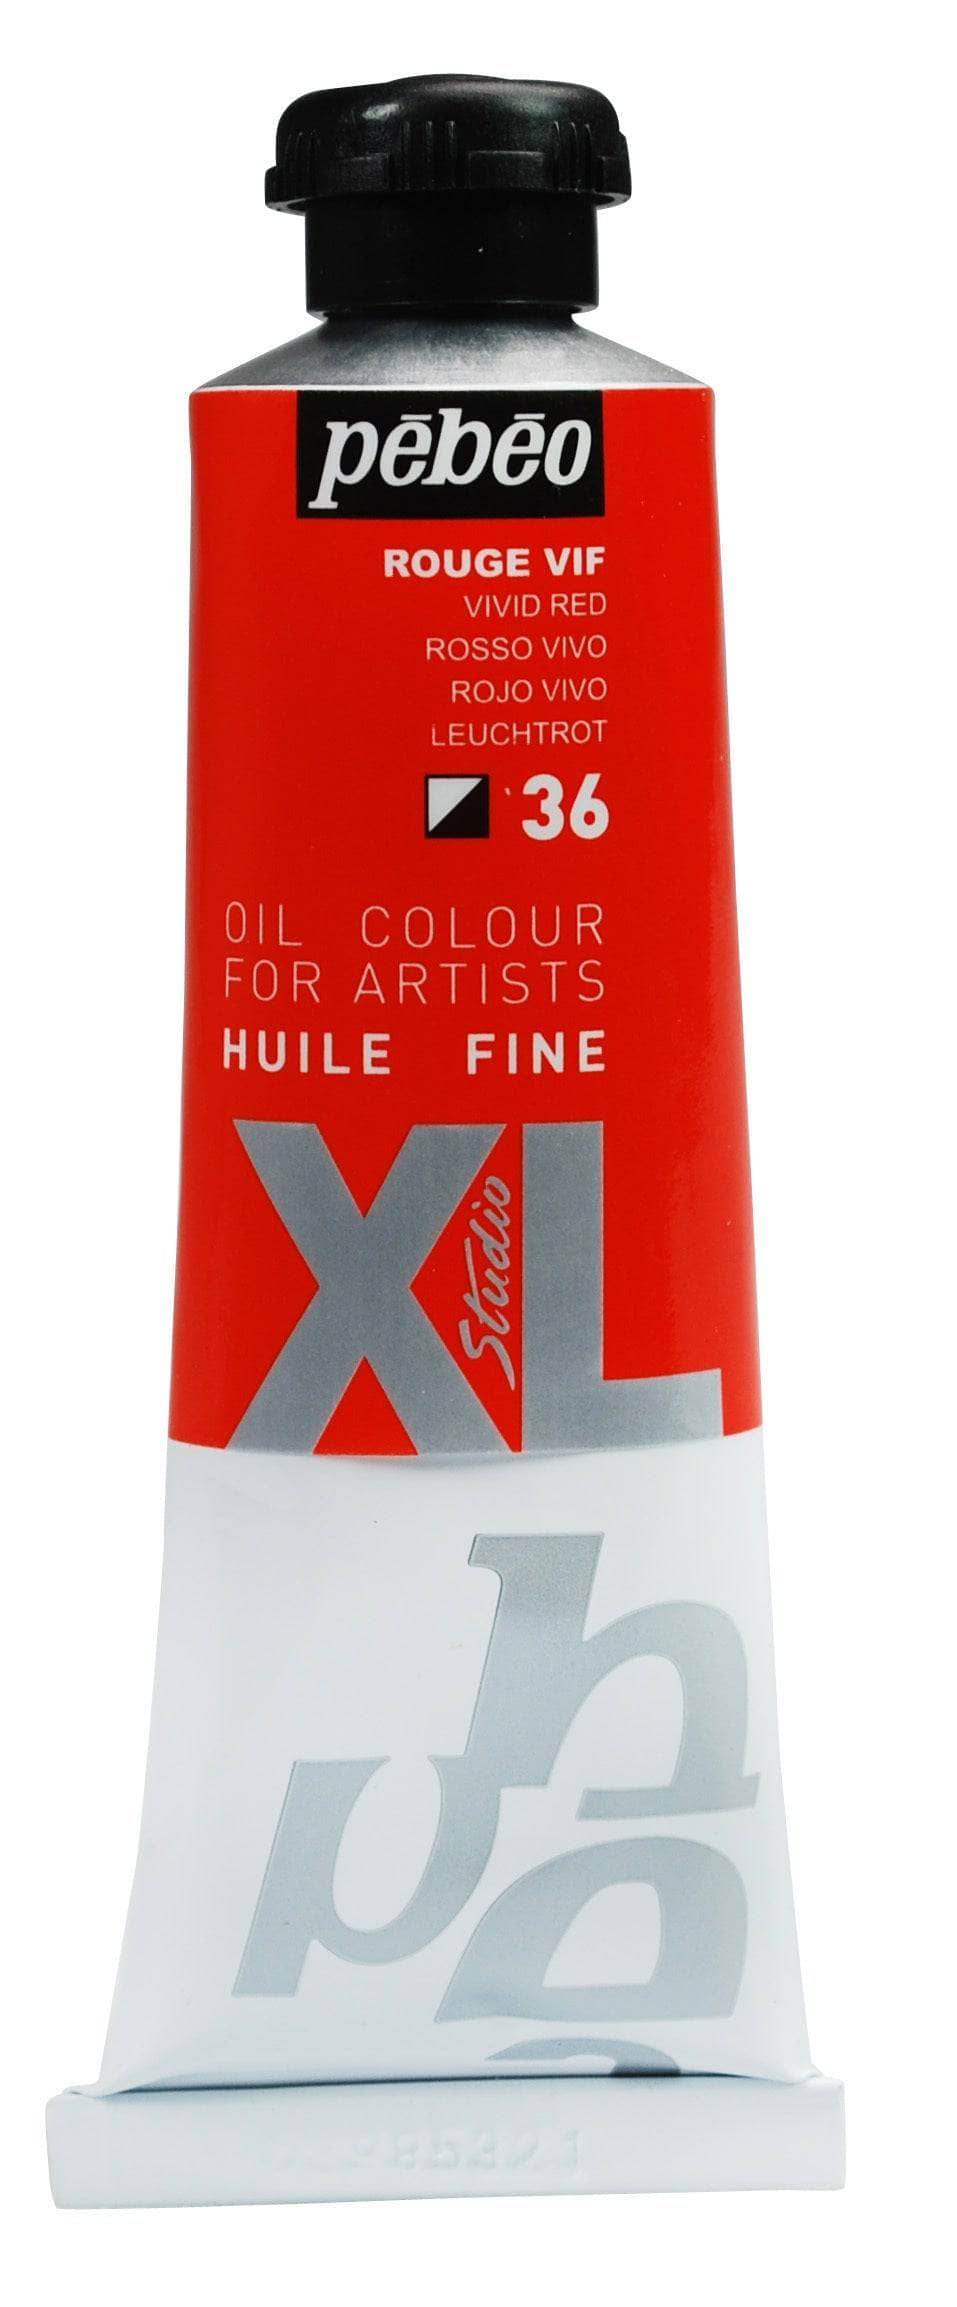 Huile fine Studio XL 37ml - Rouge Vif
PB937036